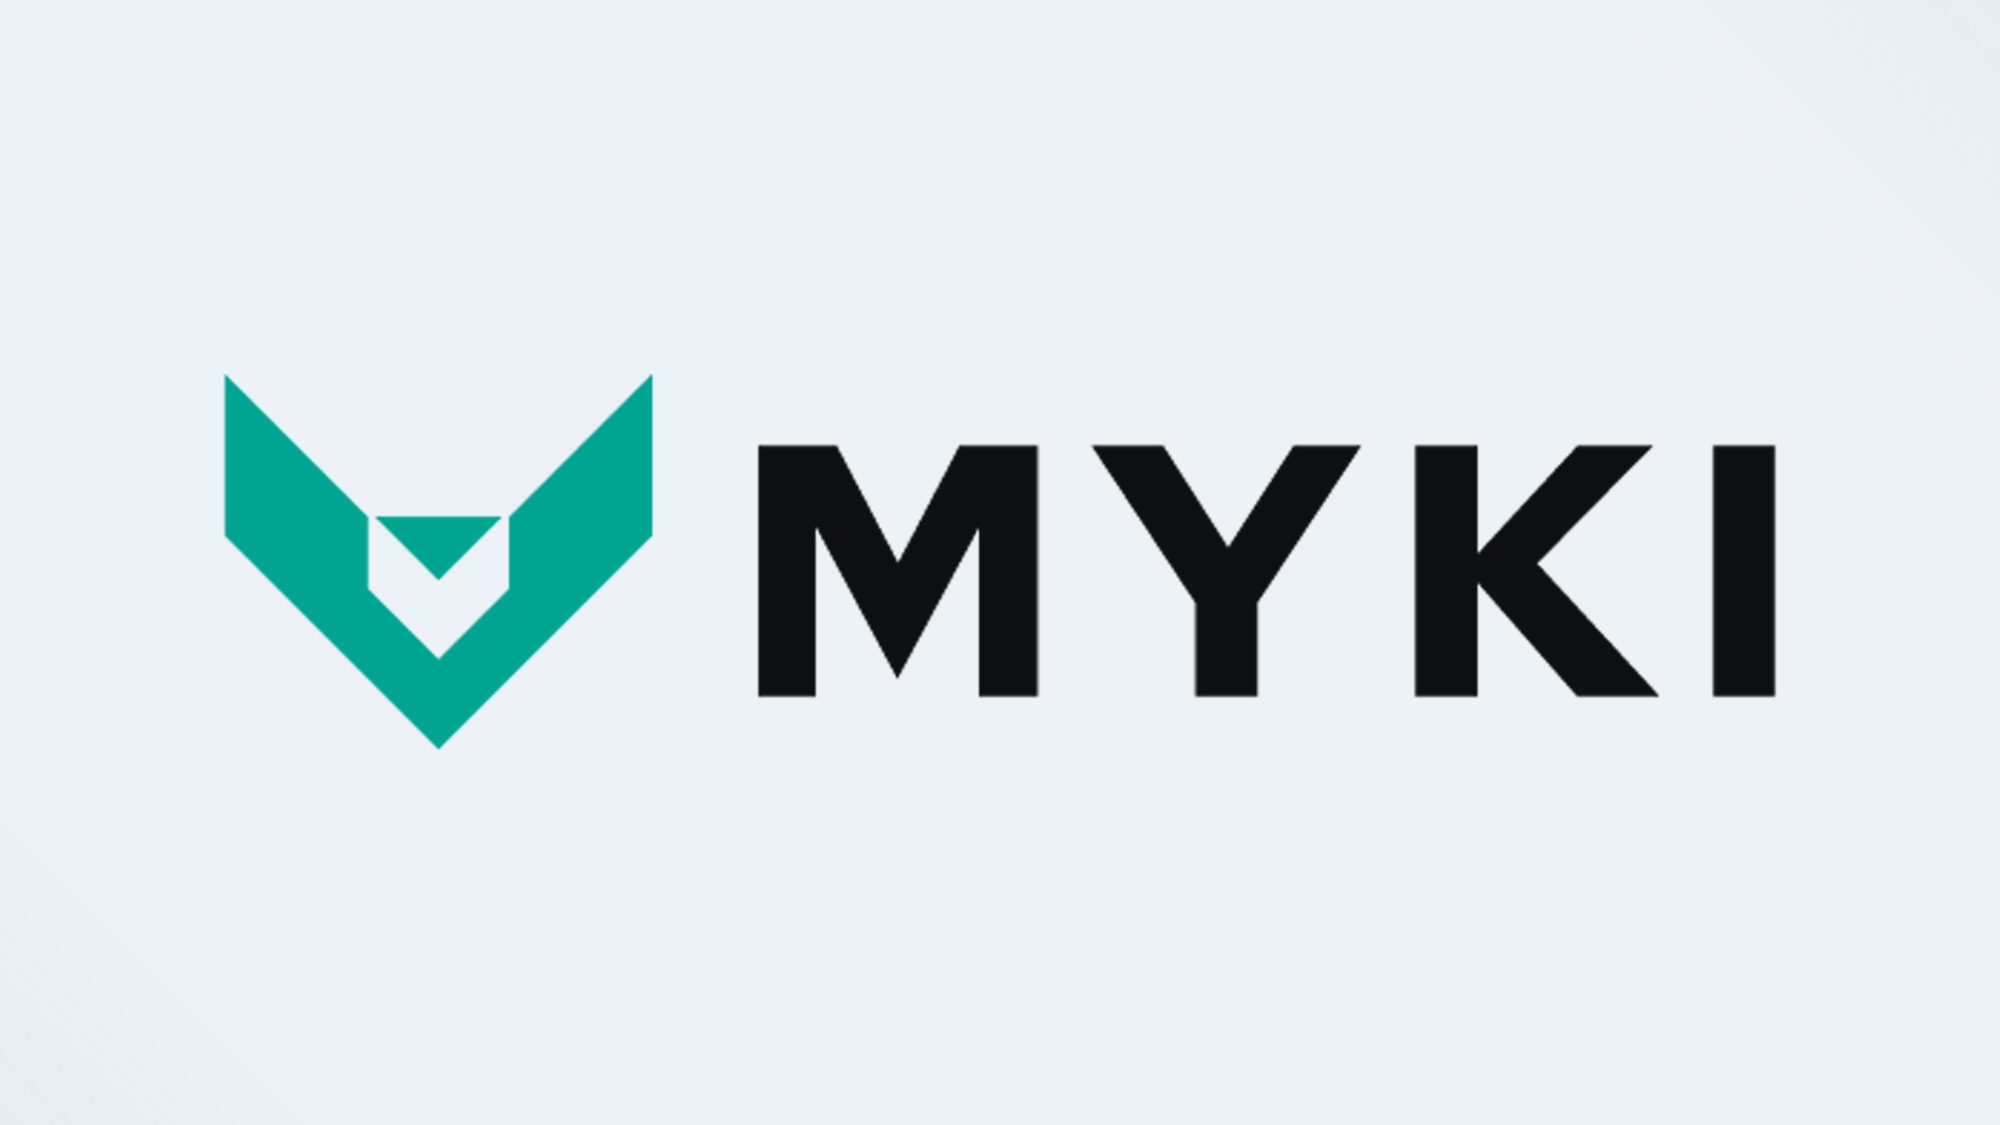 Myki password manager logo